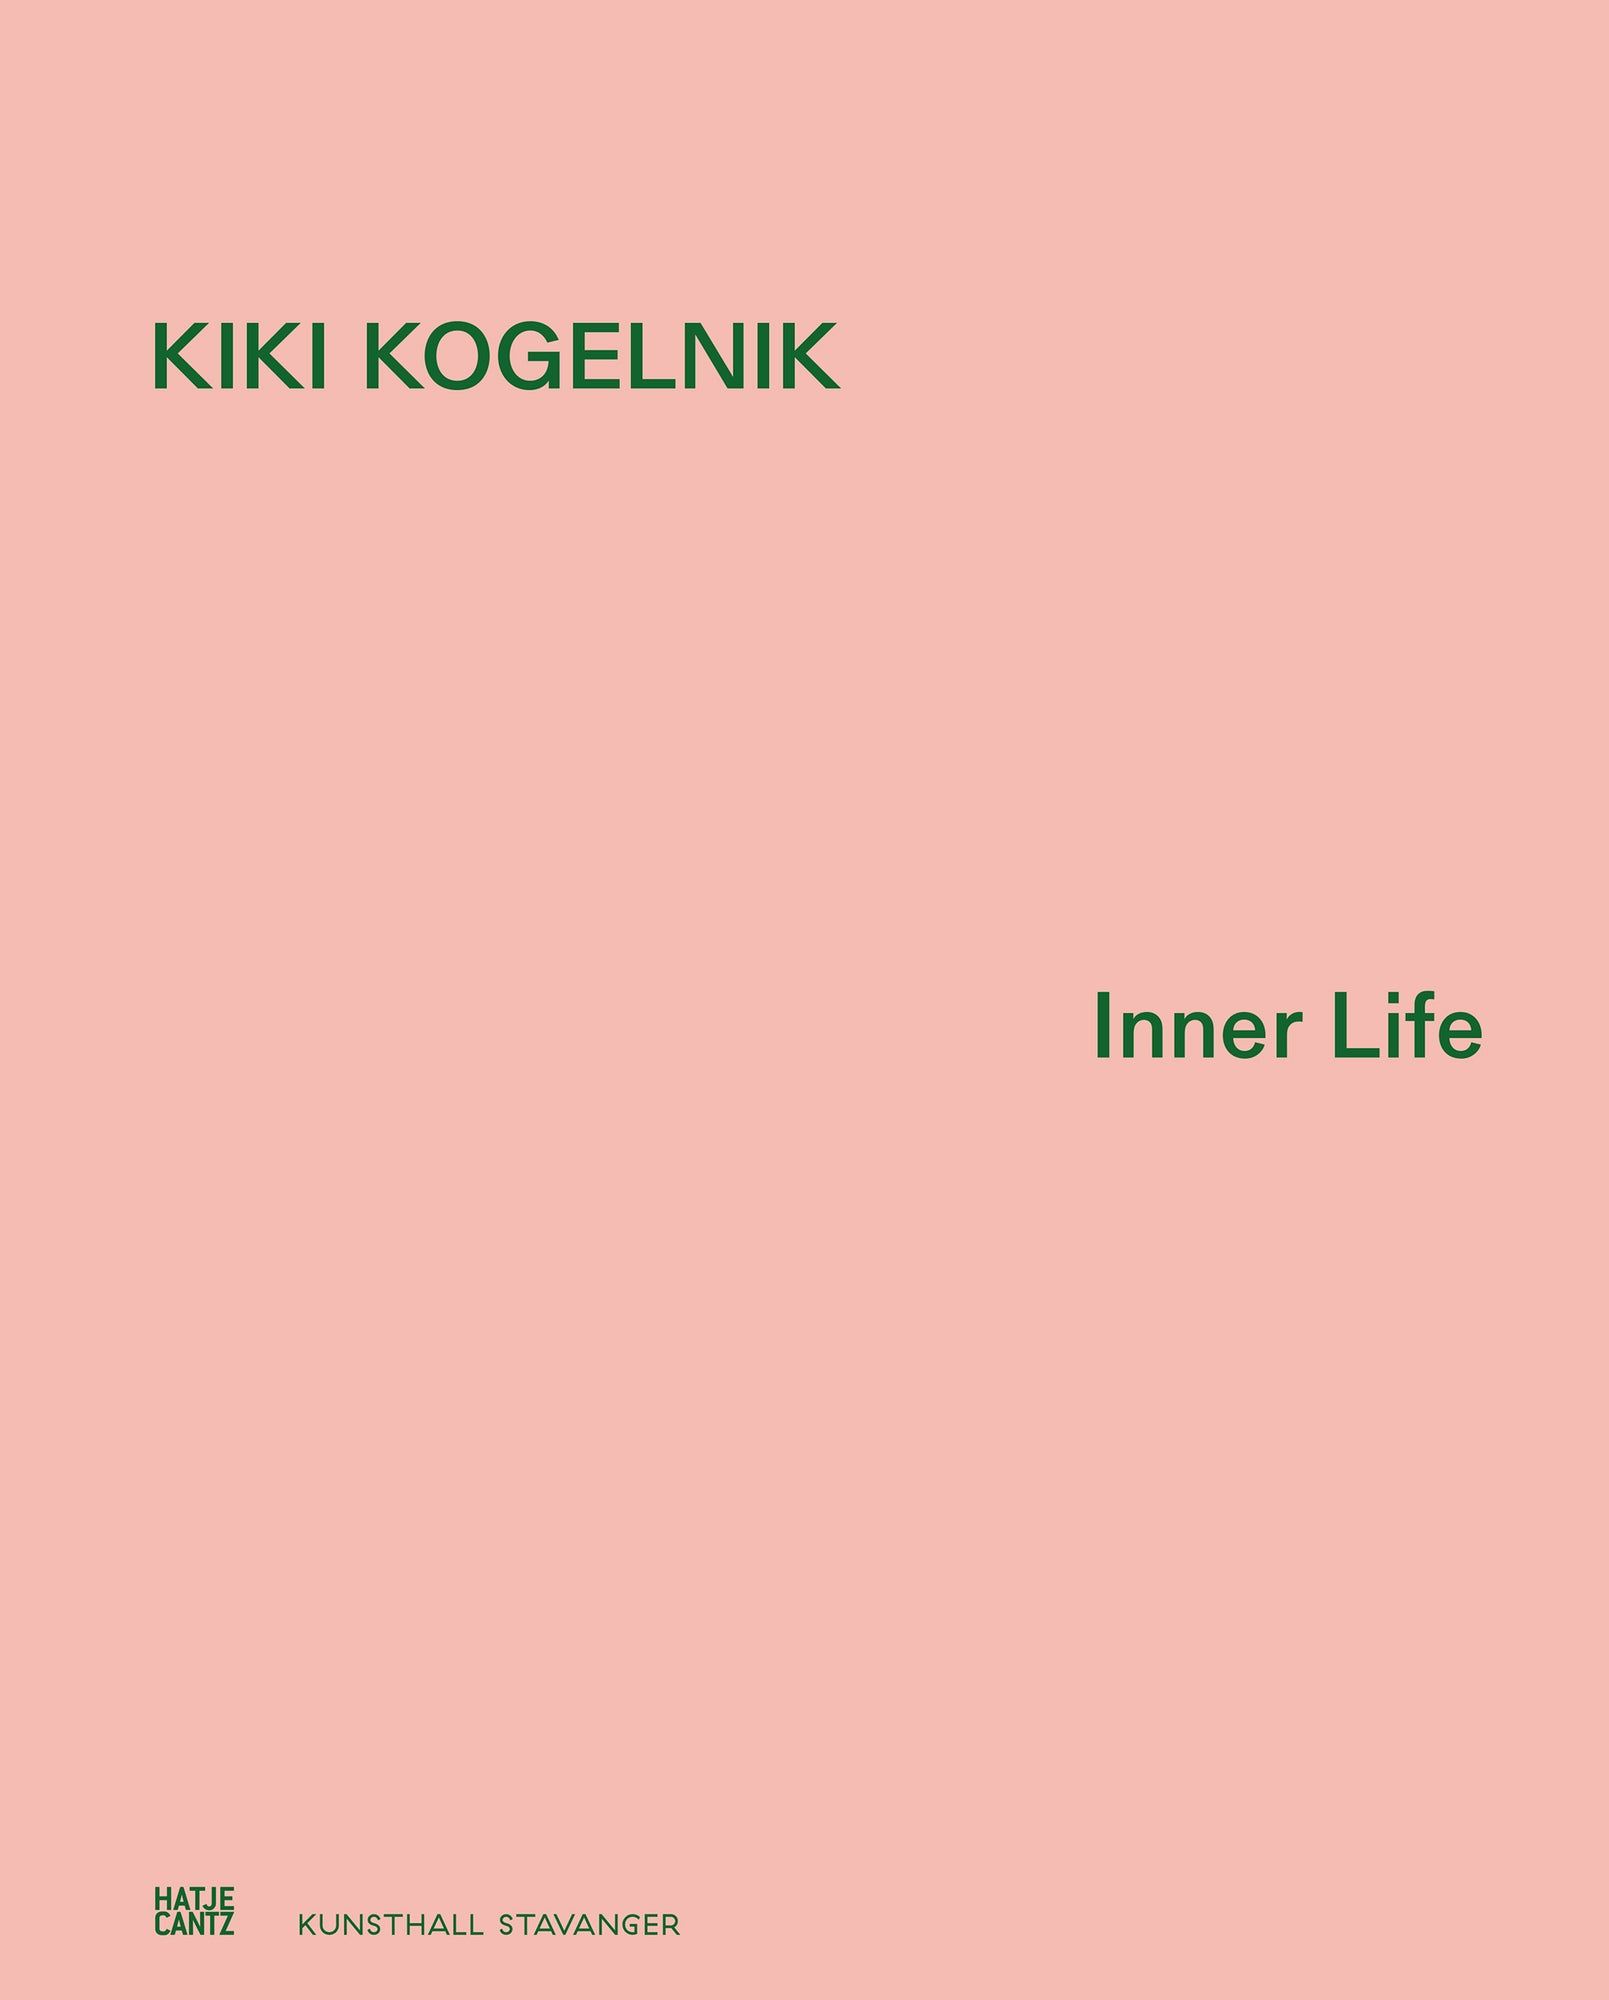 Salmon color block with green Kiki Kogelnik Inner Life Hatje Cantz and Kunsthall Stavanbar